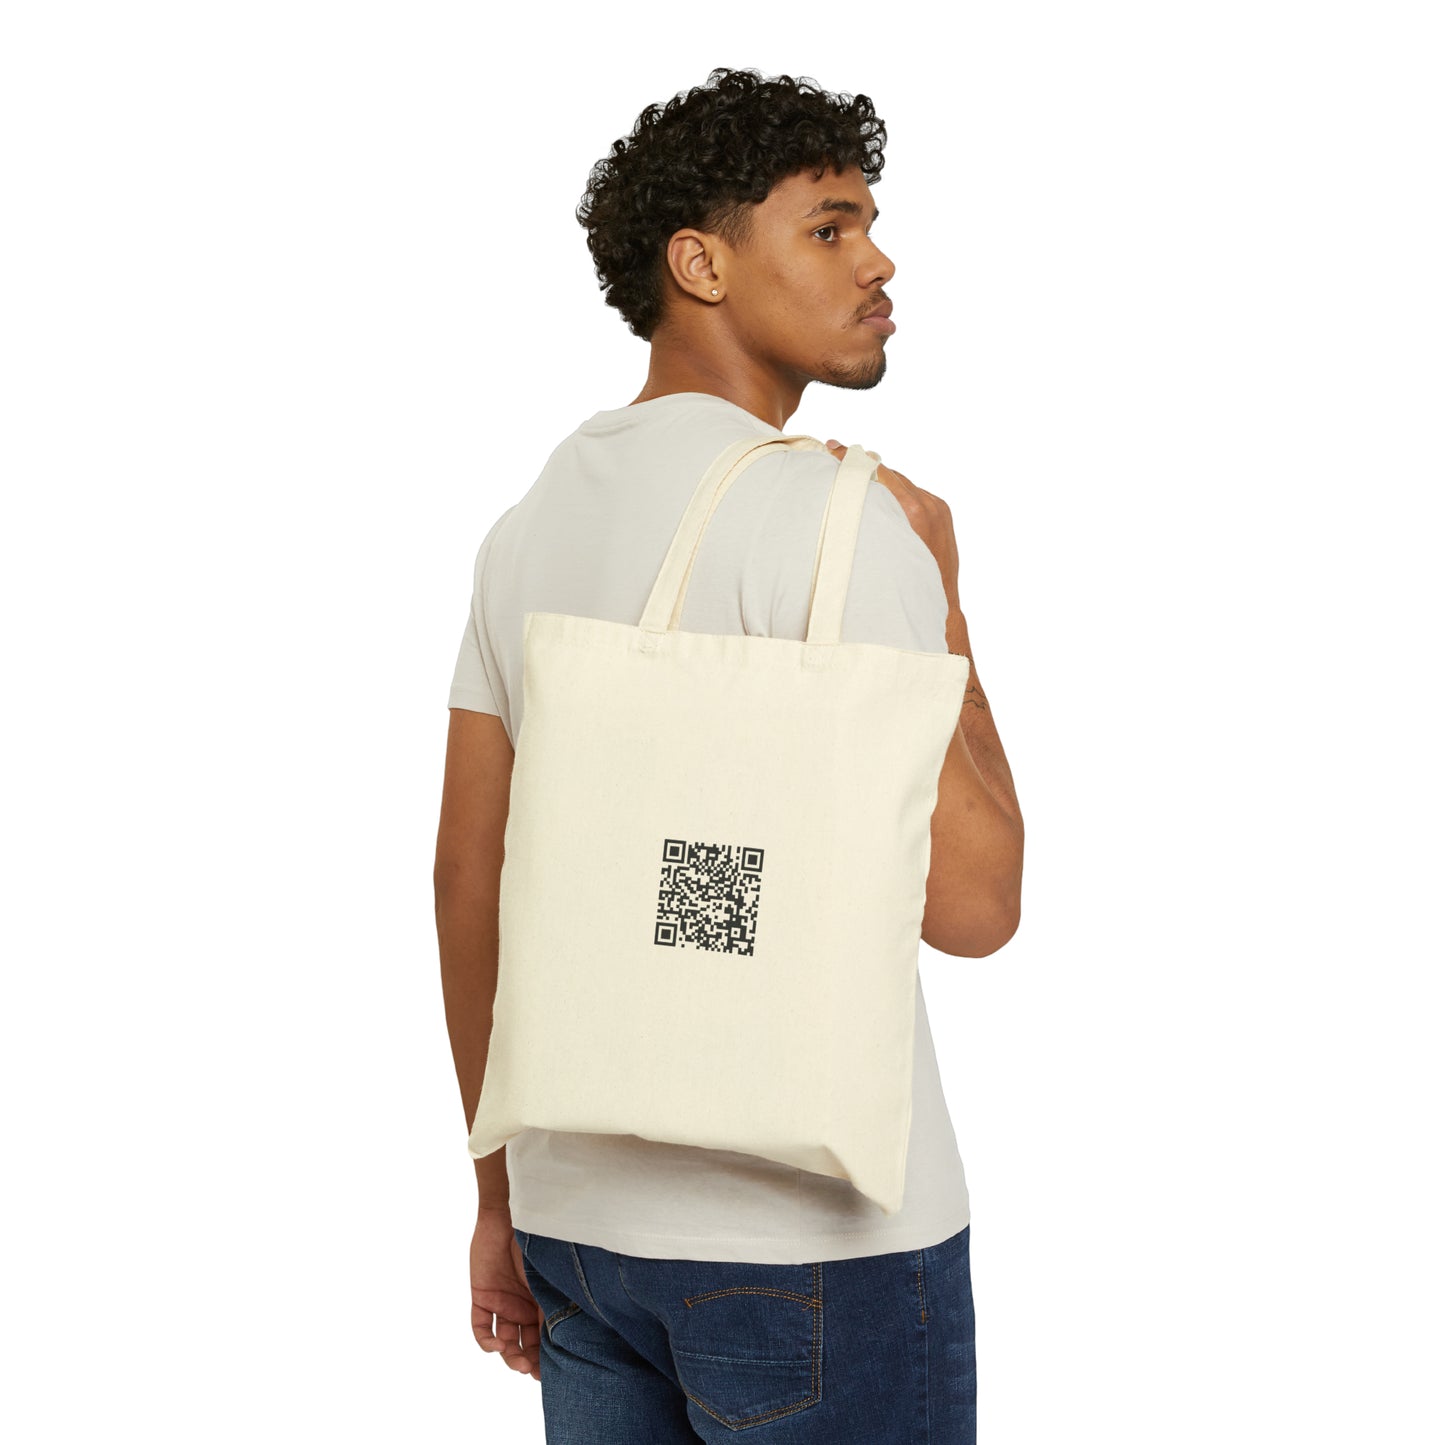 Obu's Drum - Cotton Canvas Tote Bag